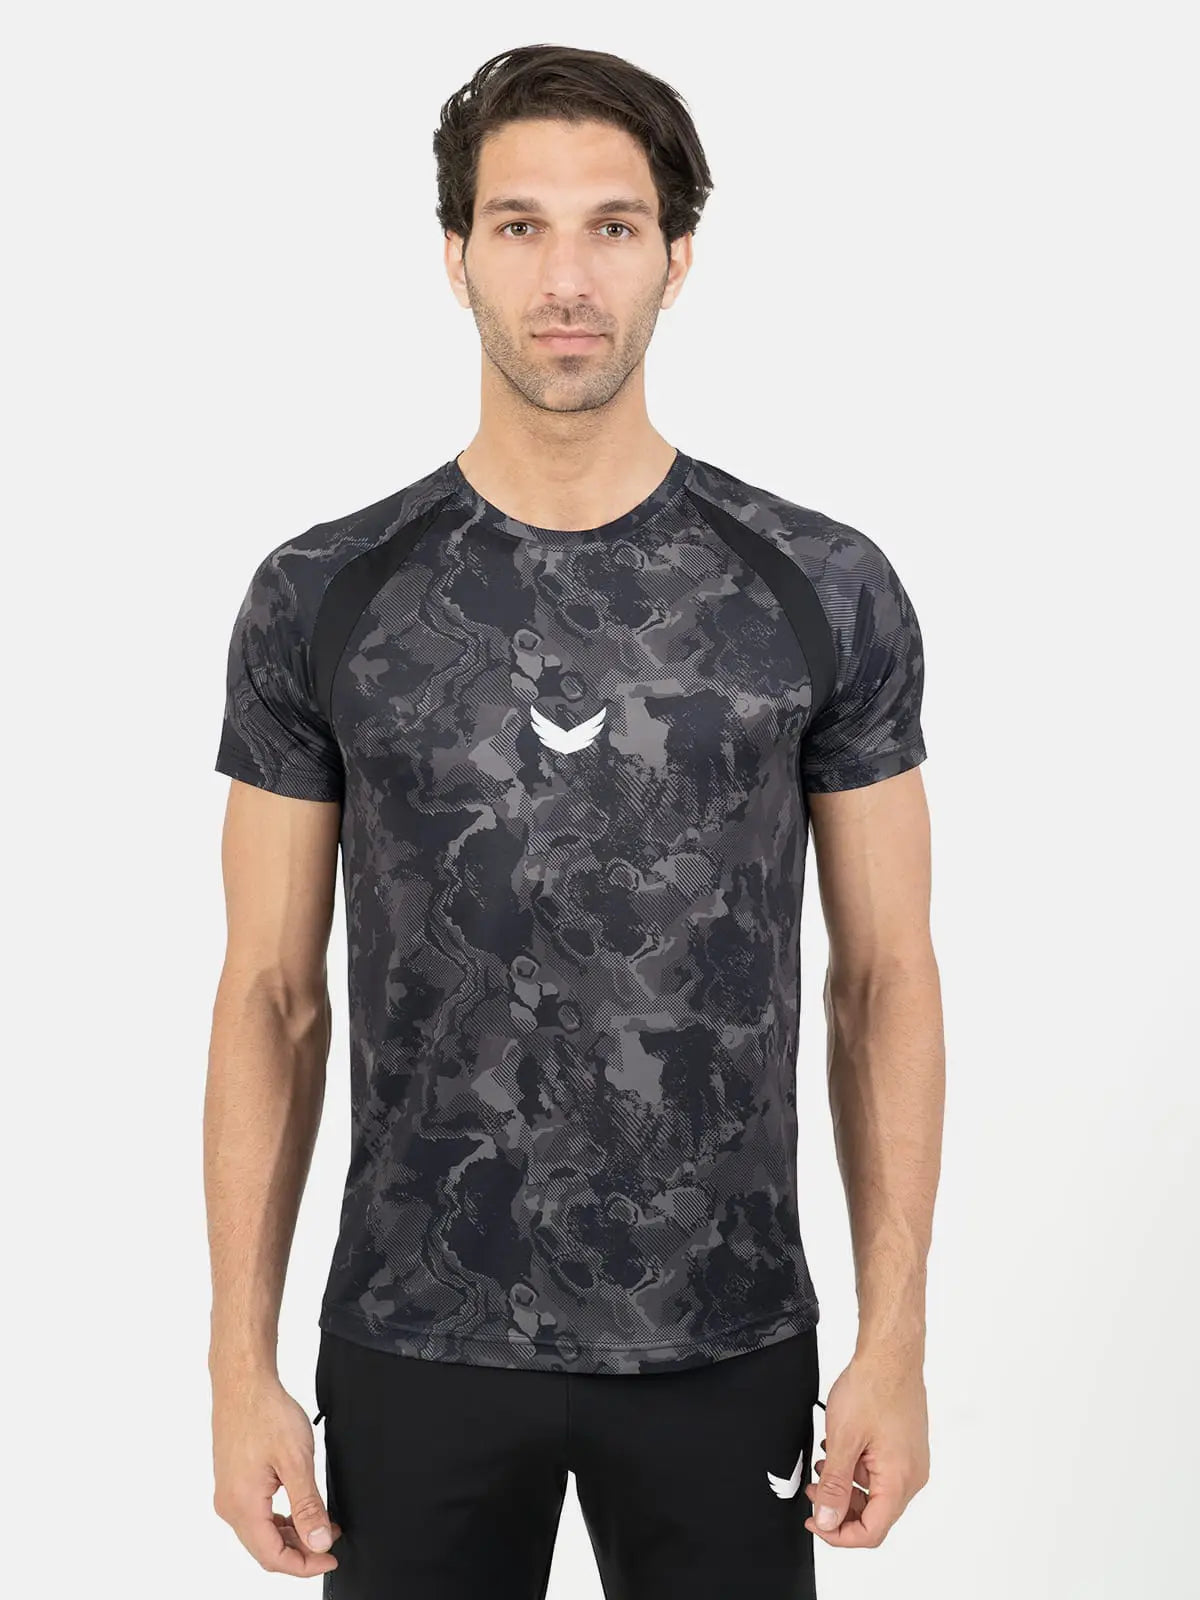 Dri-Fit Full Camouflage Short Sleeve T-shirt - Black/Gray